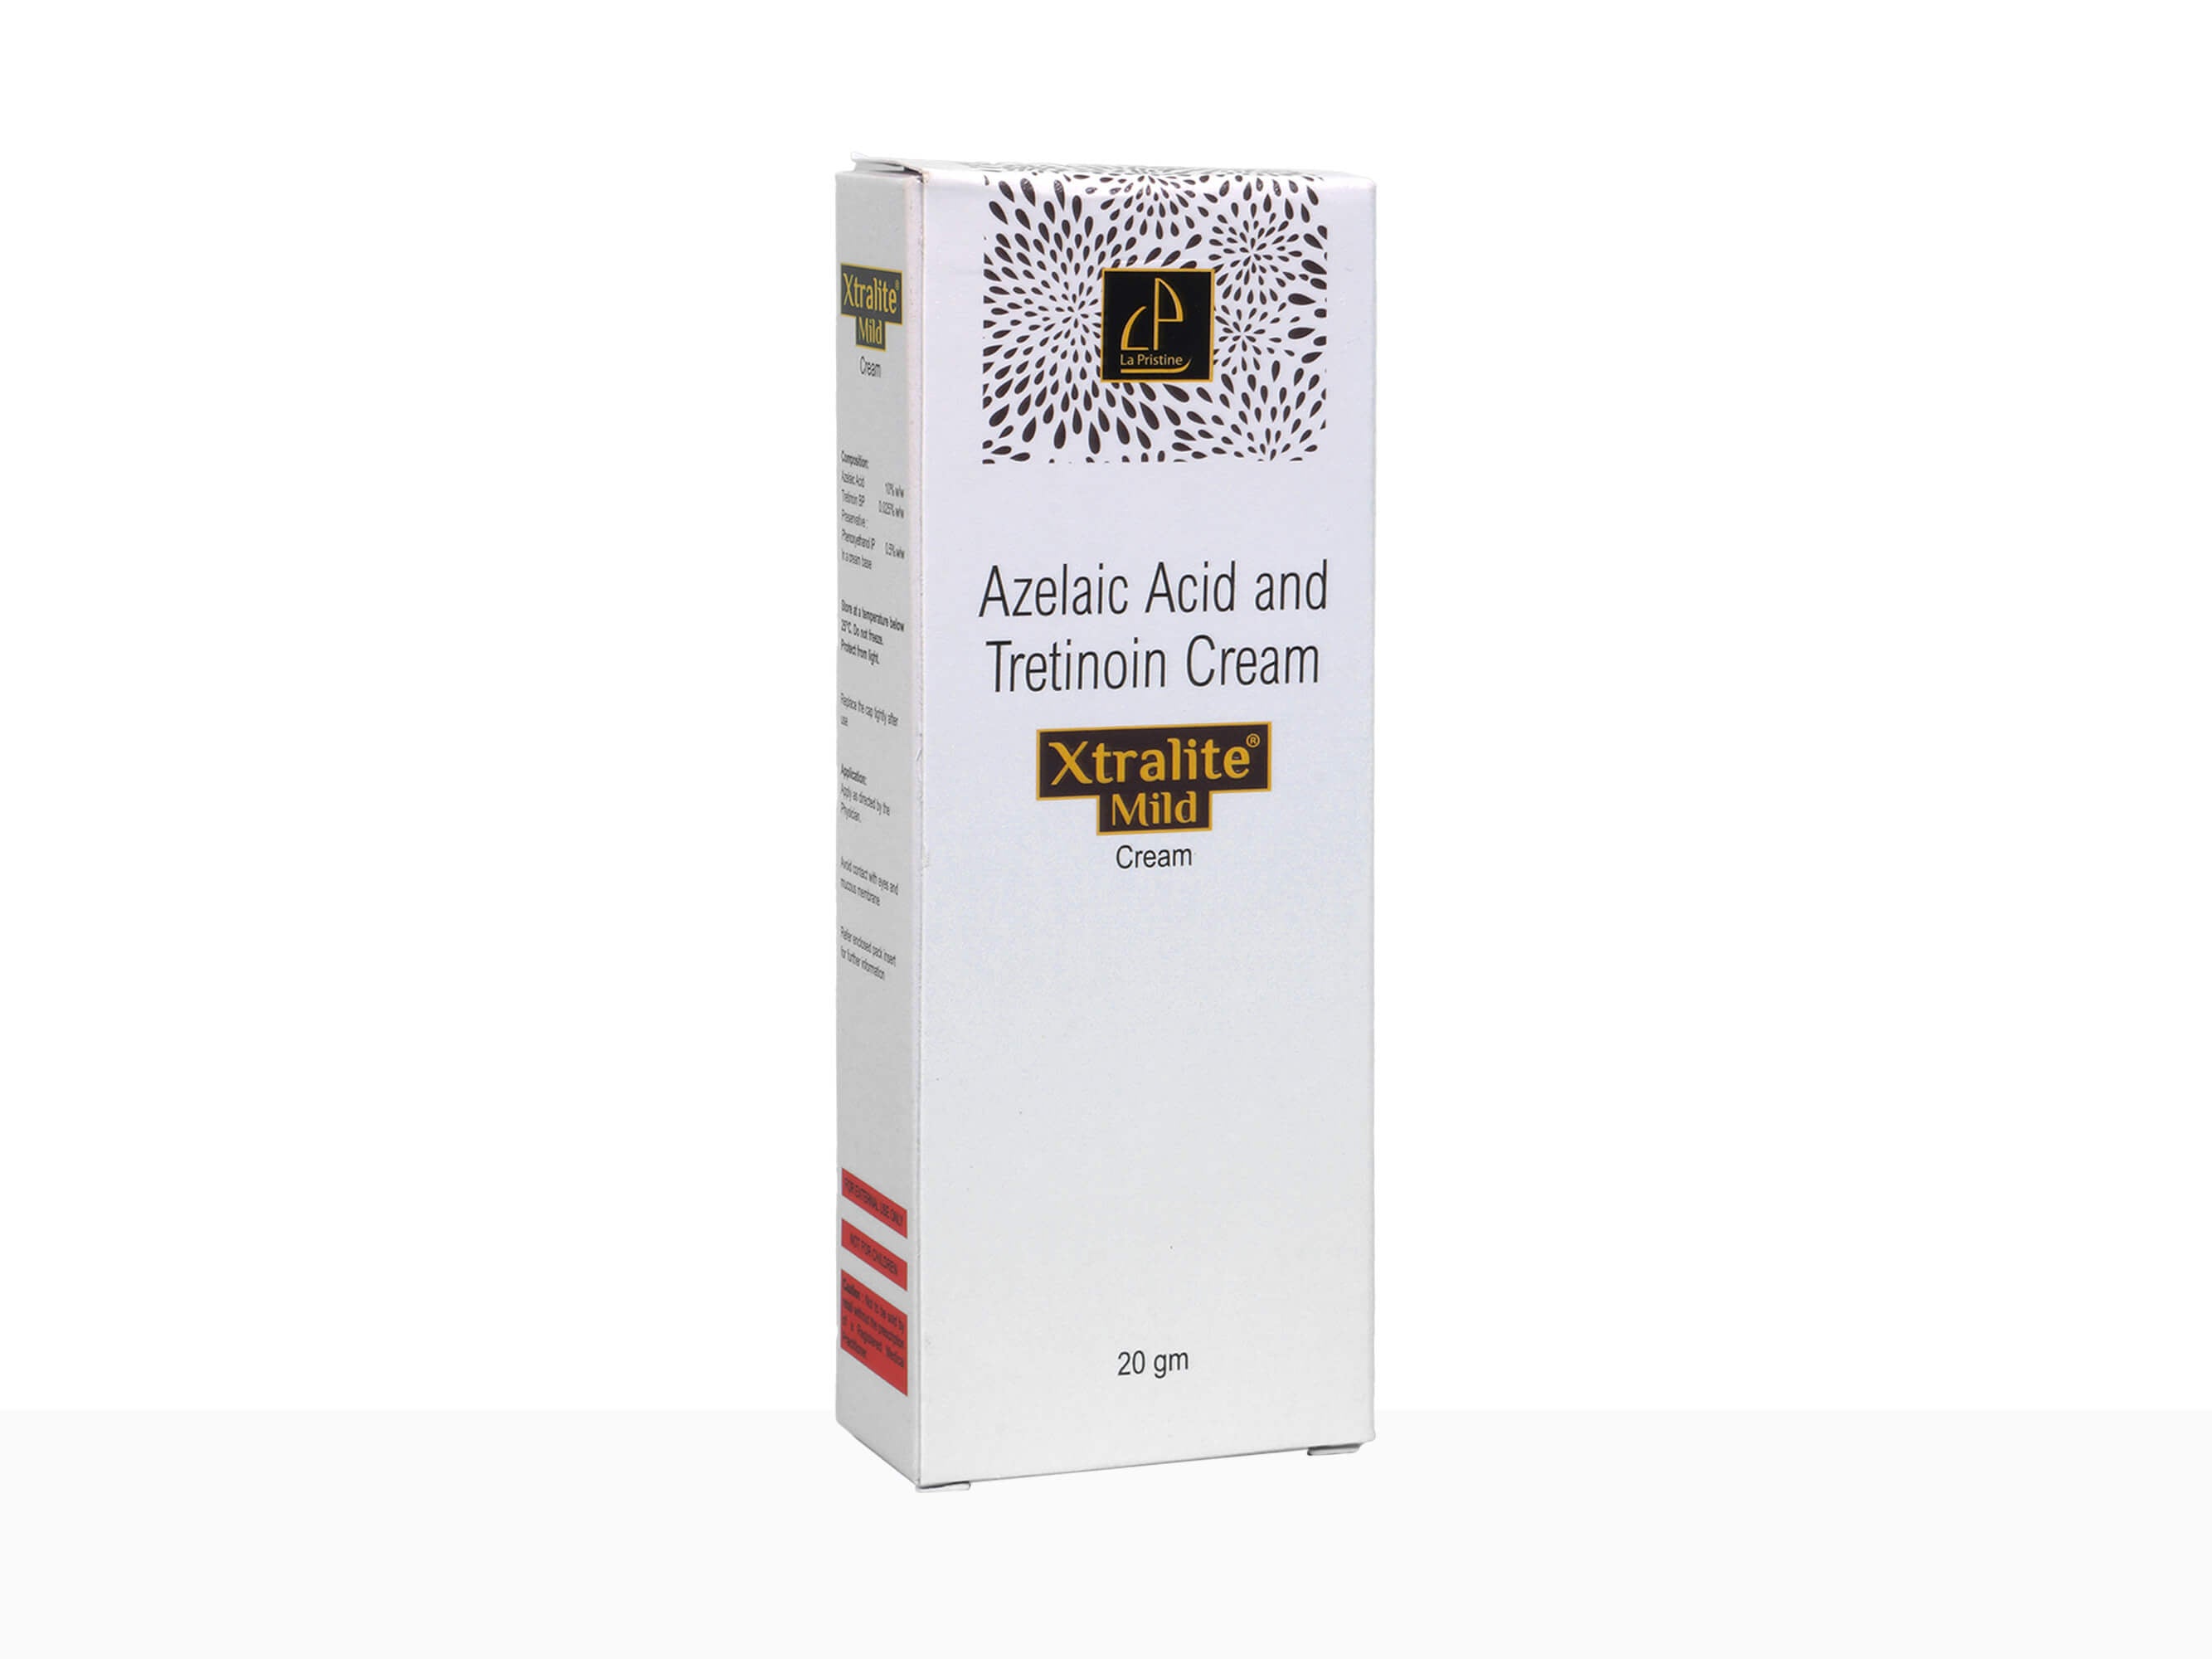 Xtralite mild cream - Clinikally